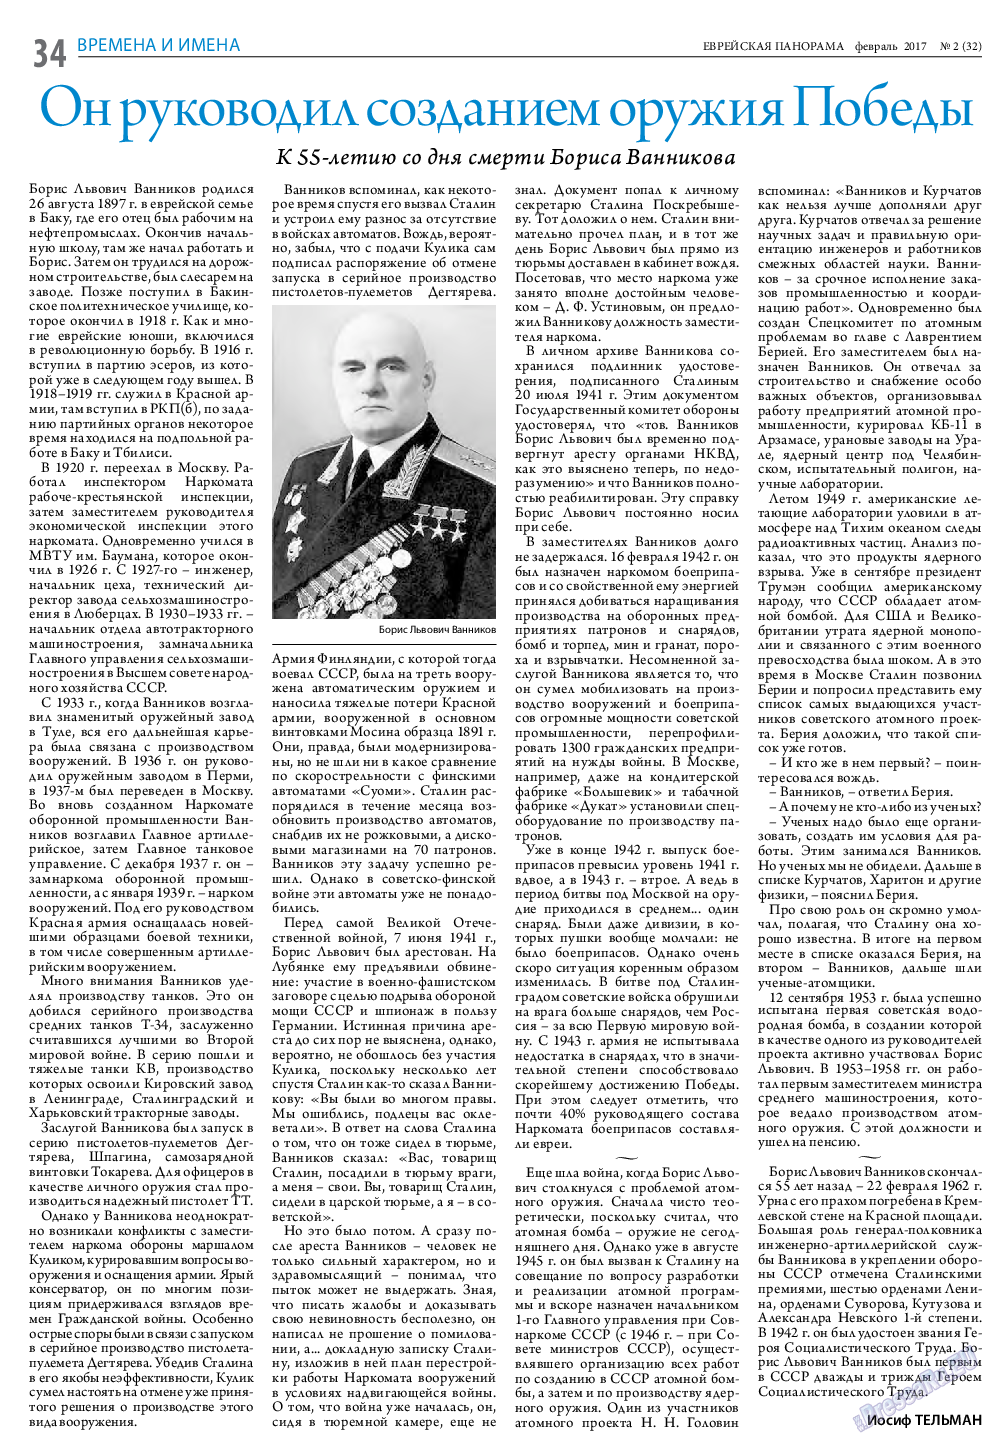 Еврейская панорама, газета. 2017 №2 стр.34